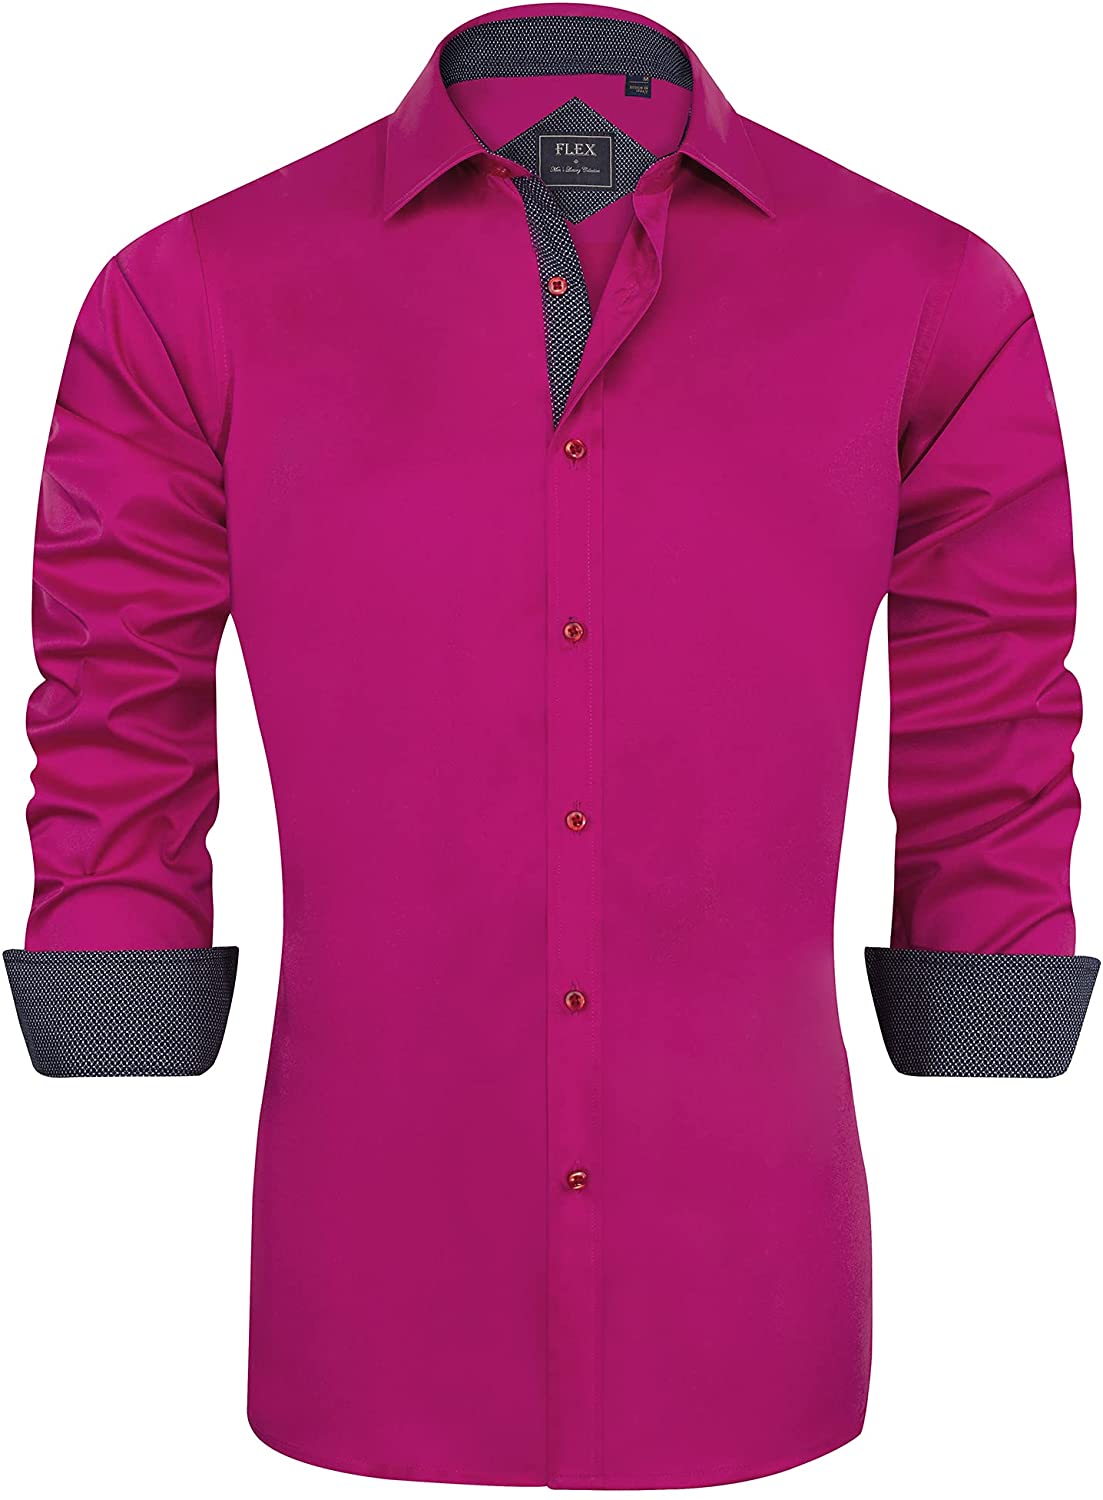 Men's Shirts - Buy Men's Shirts Online Starting at Just ₹216